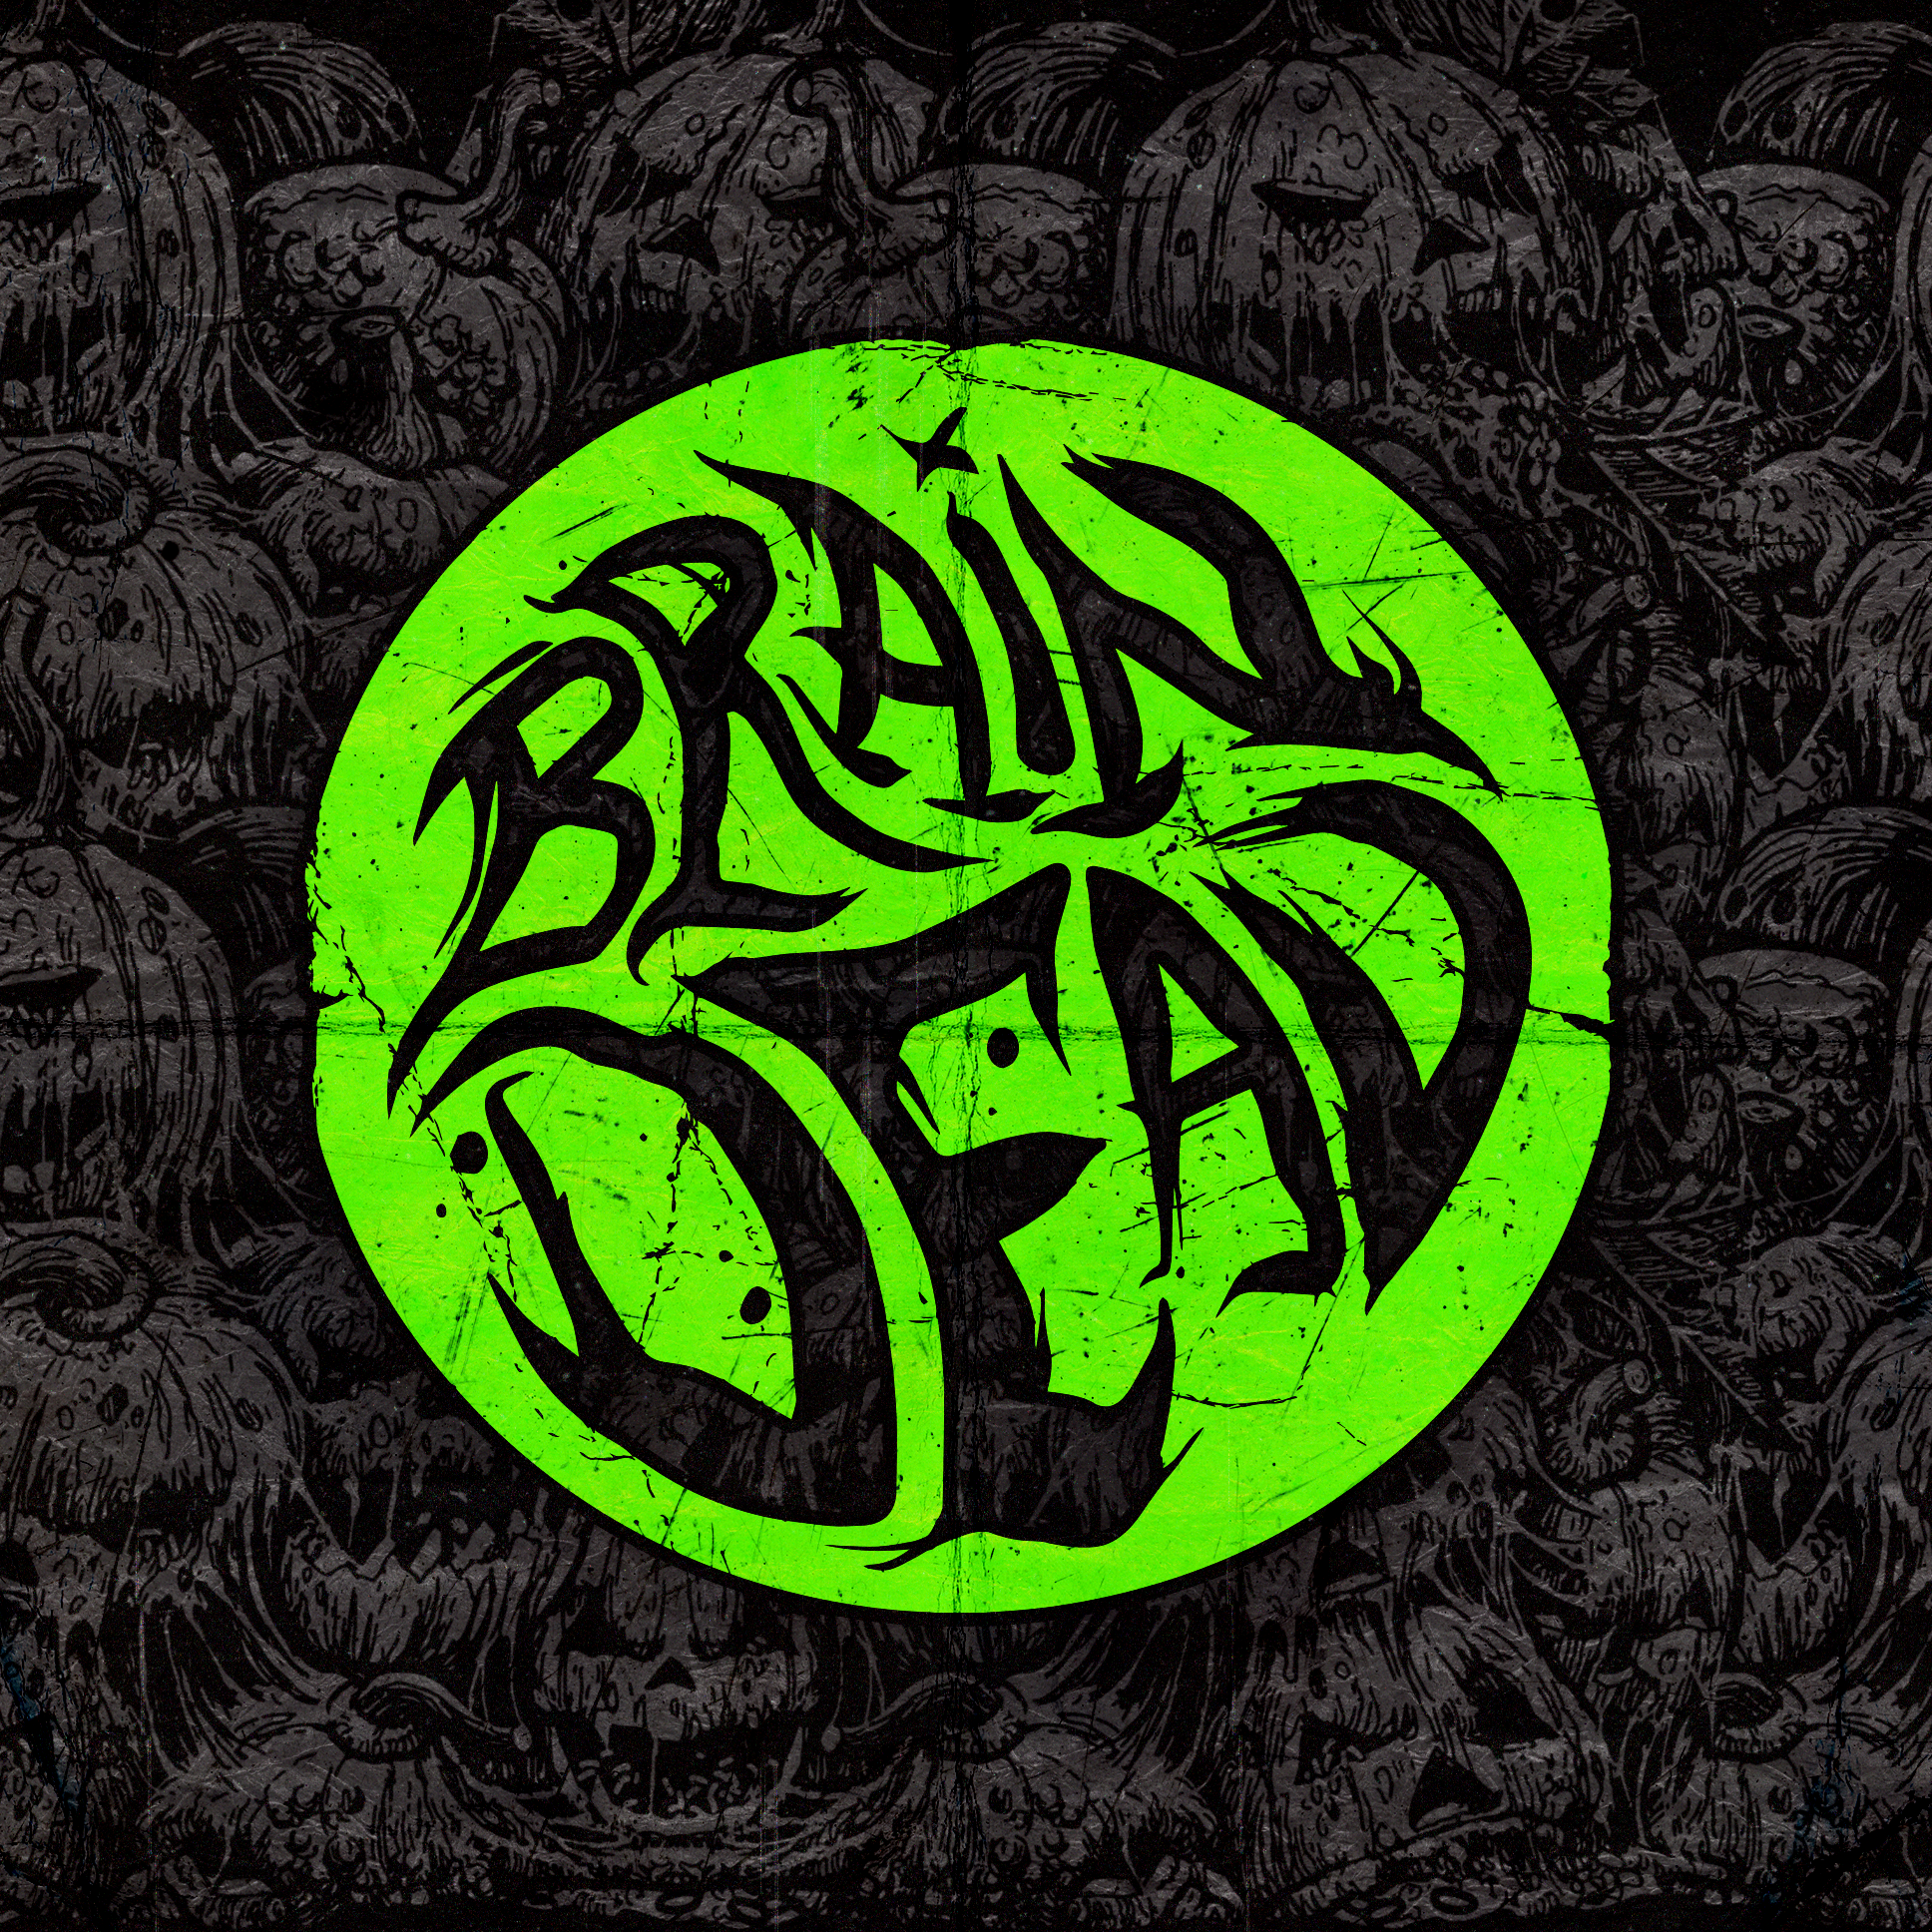 The brain dead logo on a black background.